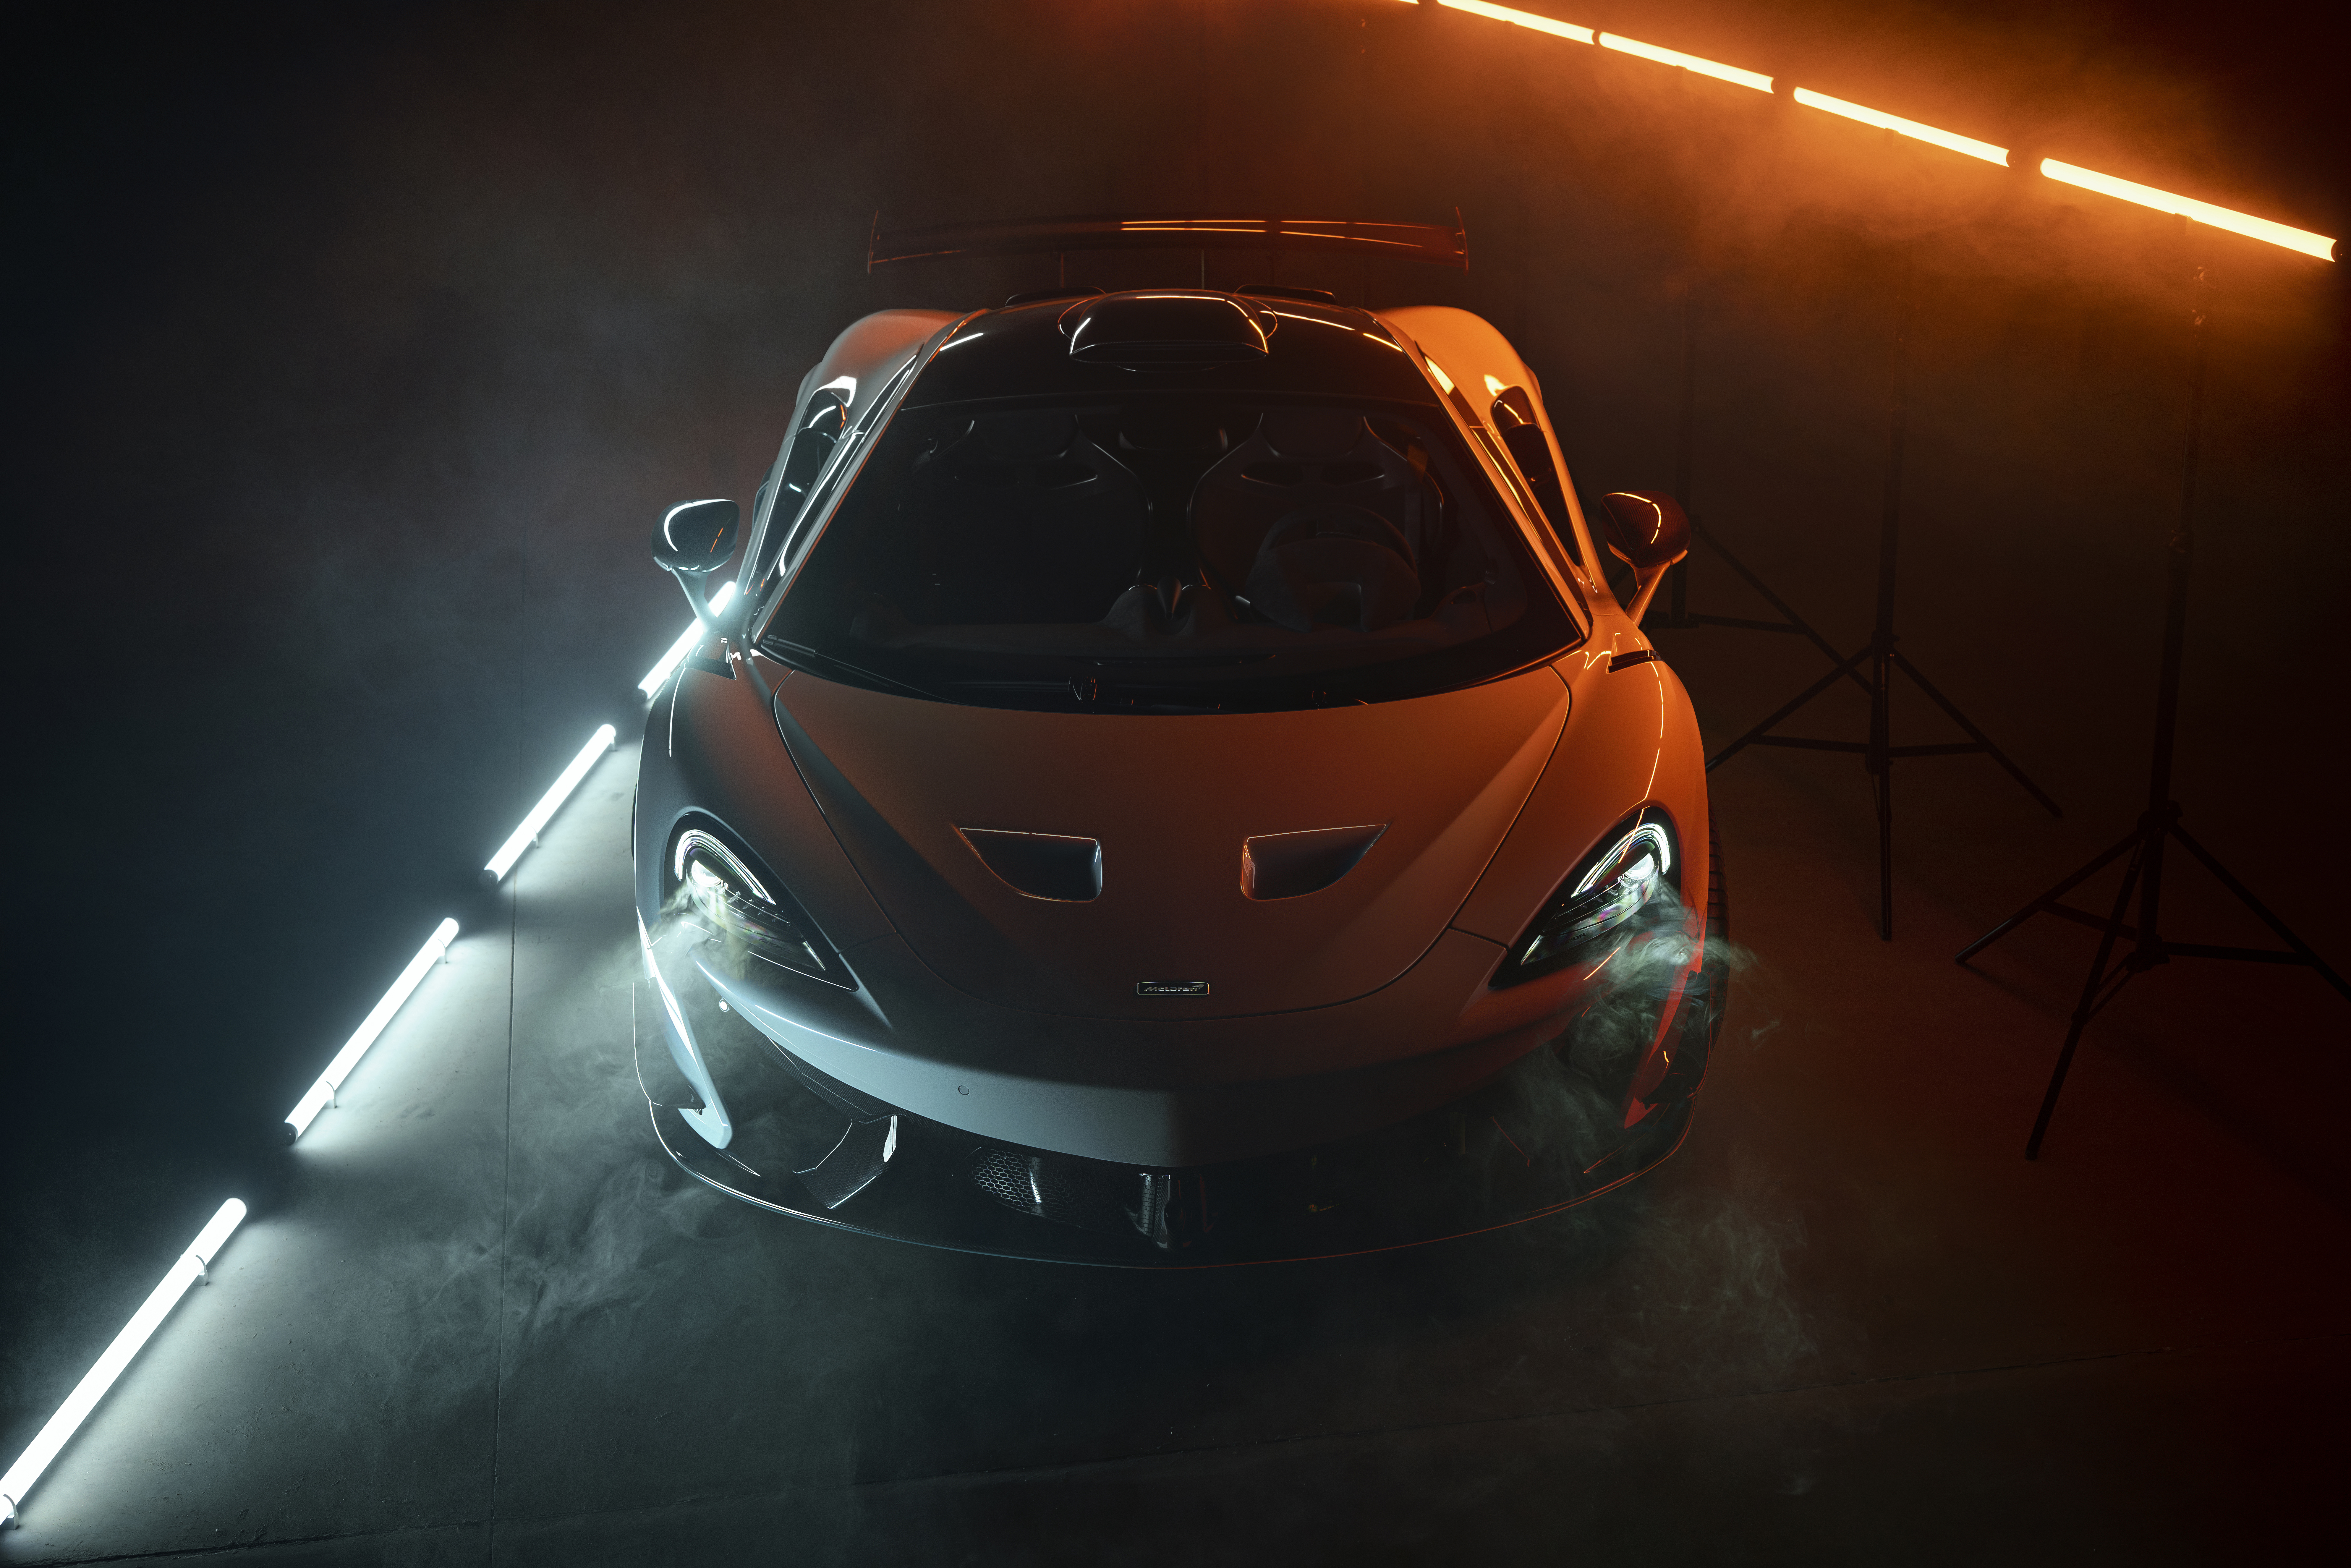 Orange mclaren r with ambient fog and lighting mclaren car orange car sport car supercar